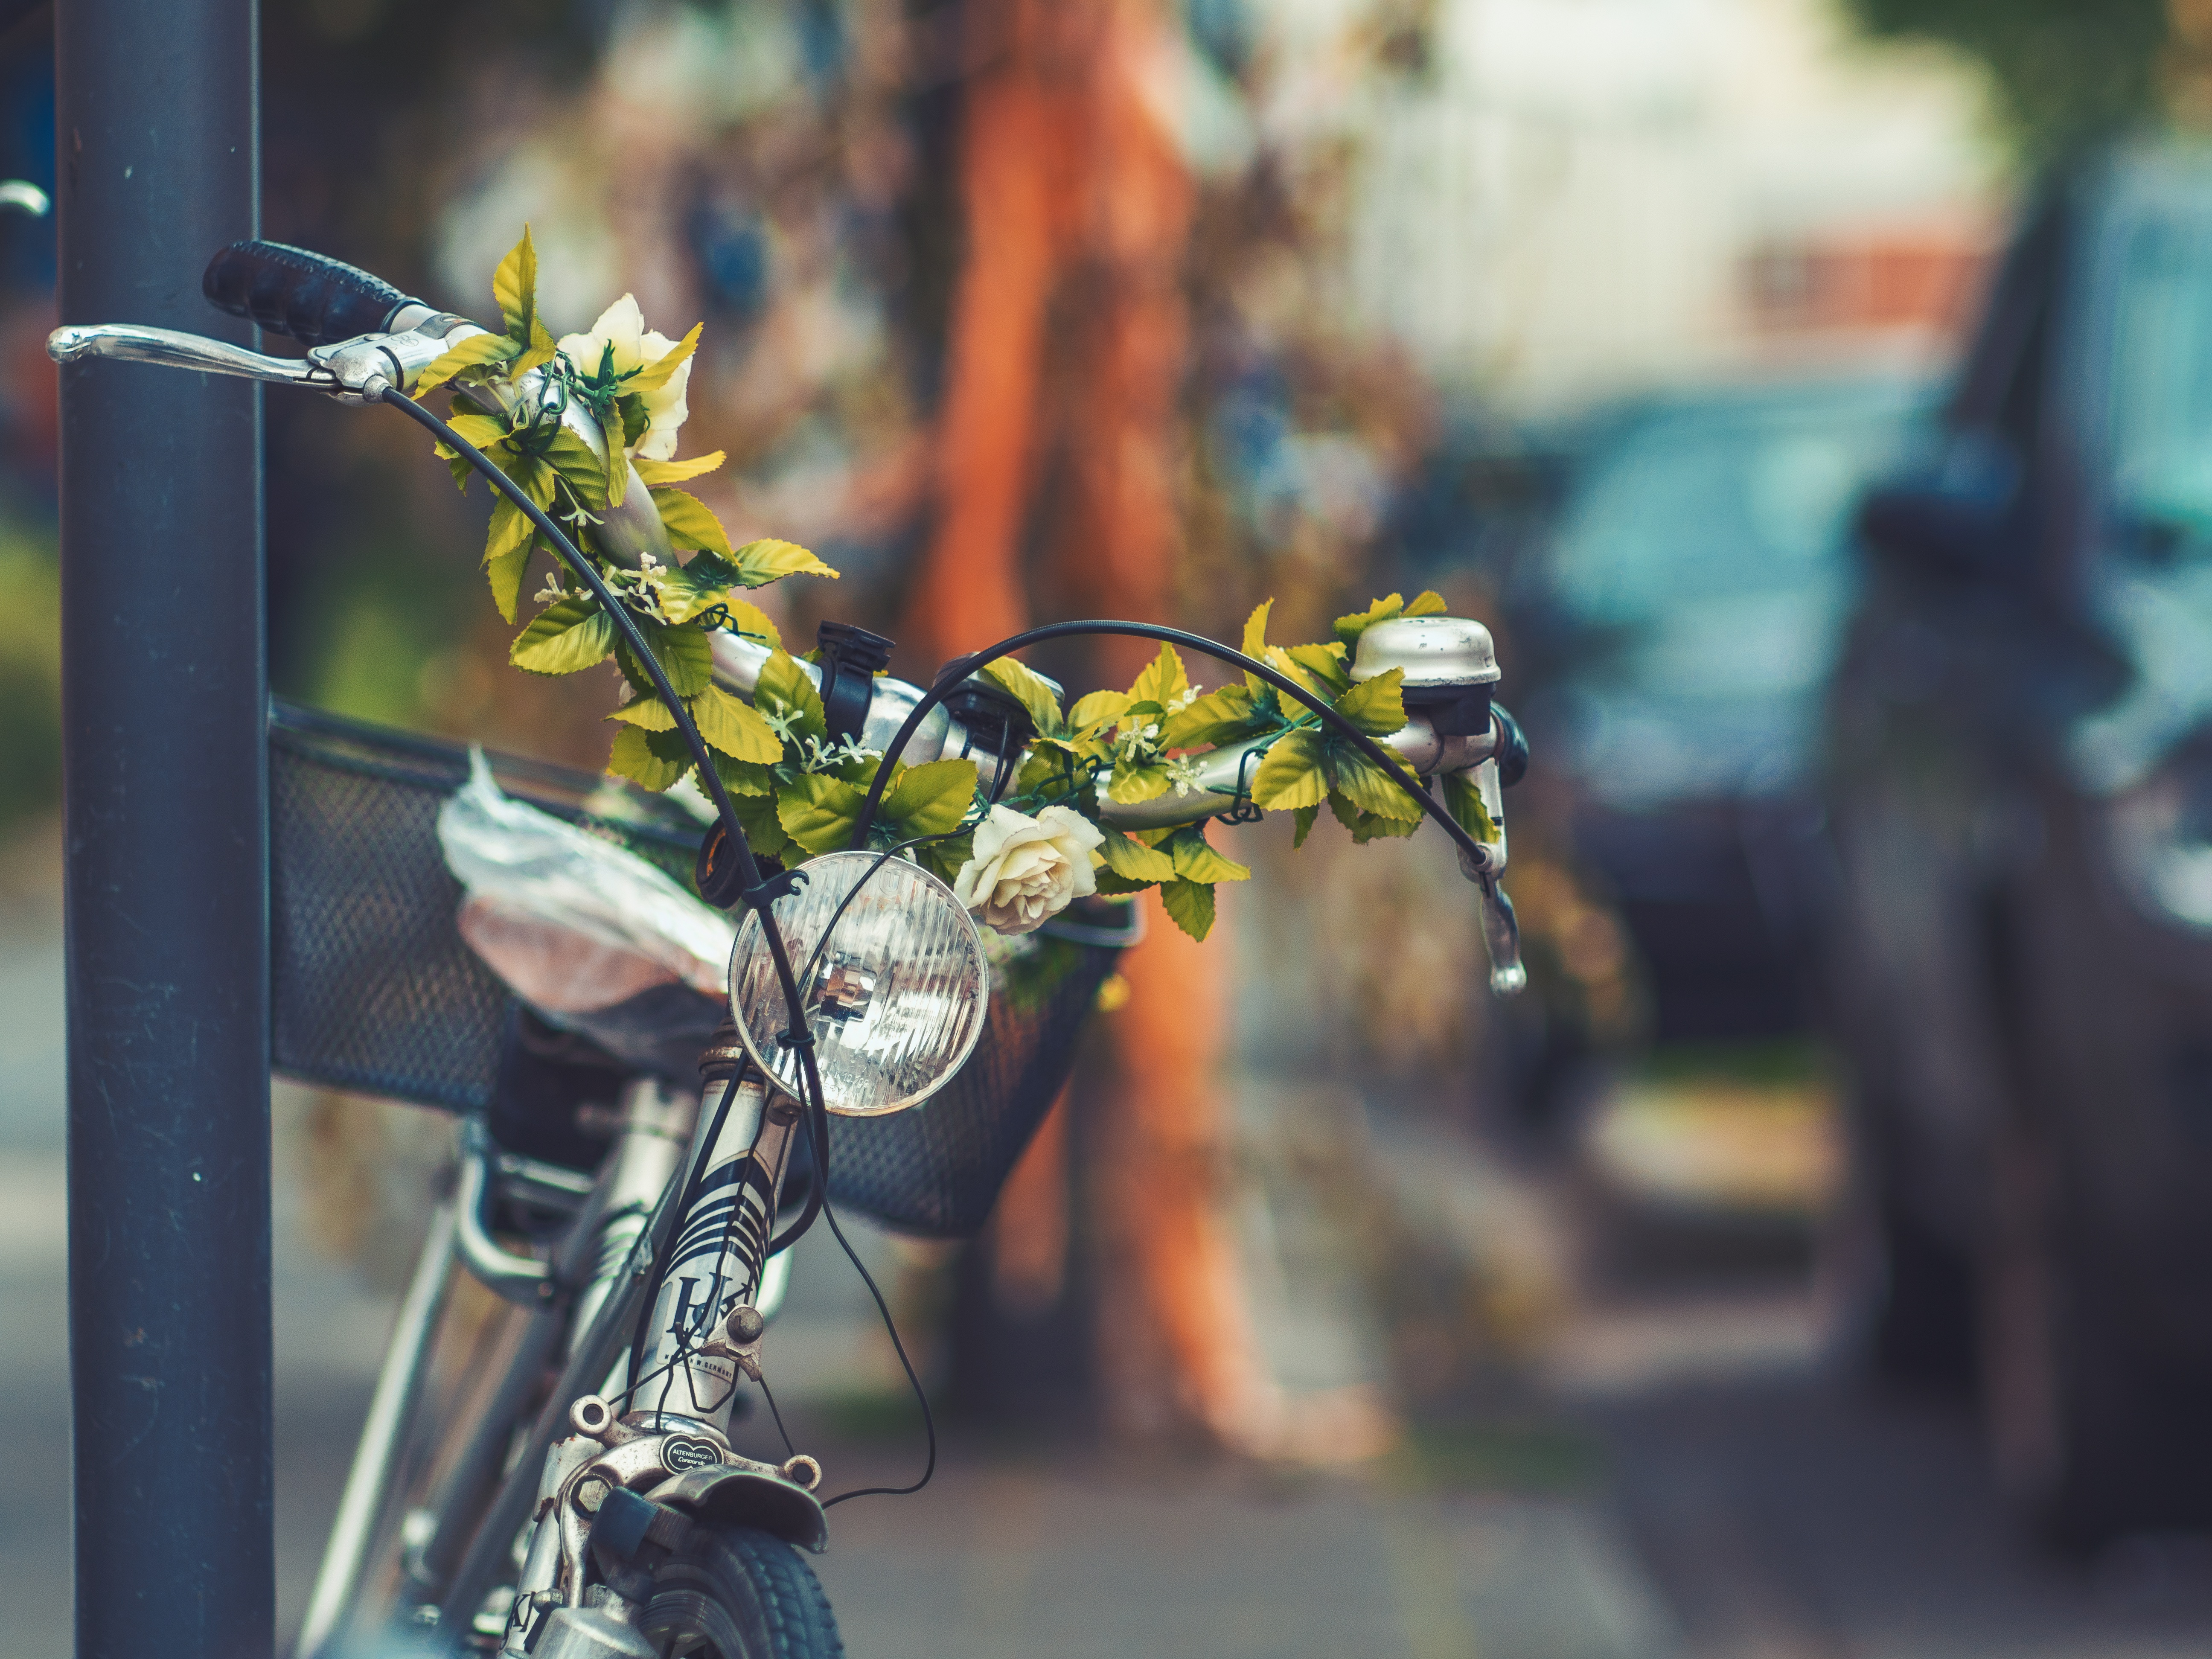 miscellanea, bicycle, flowers, miscellaneous, headlight